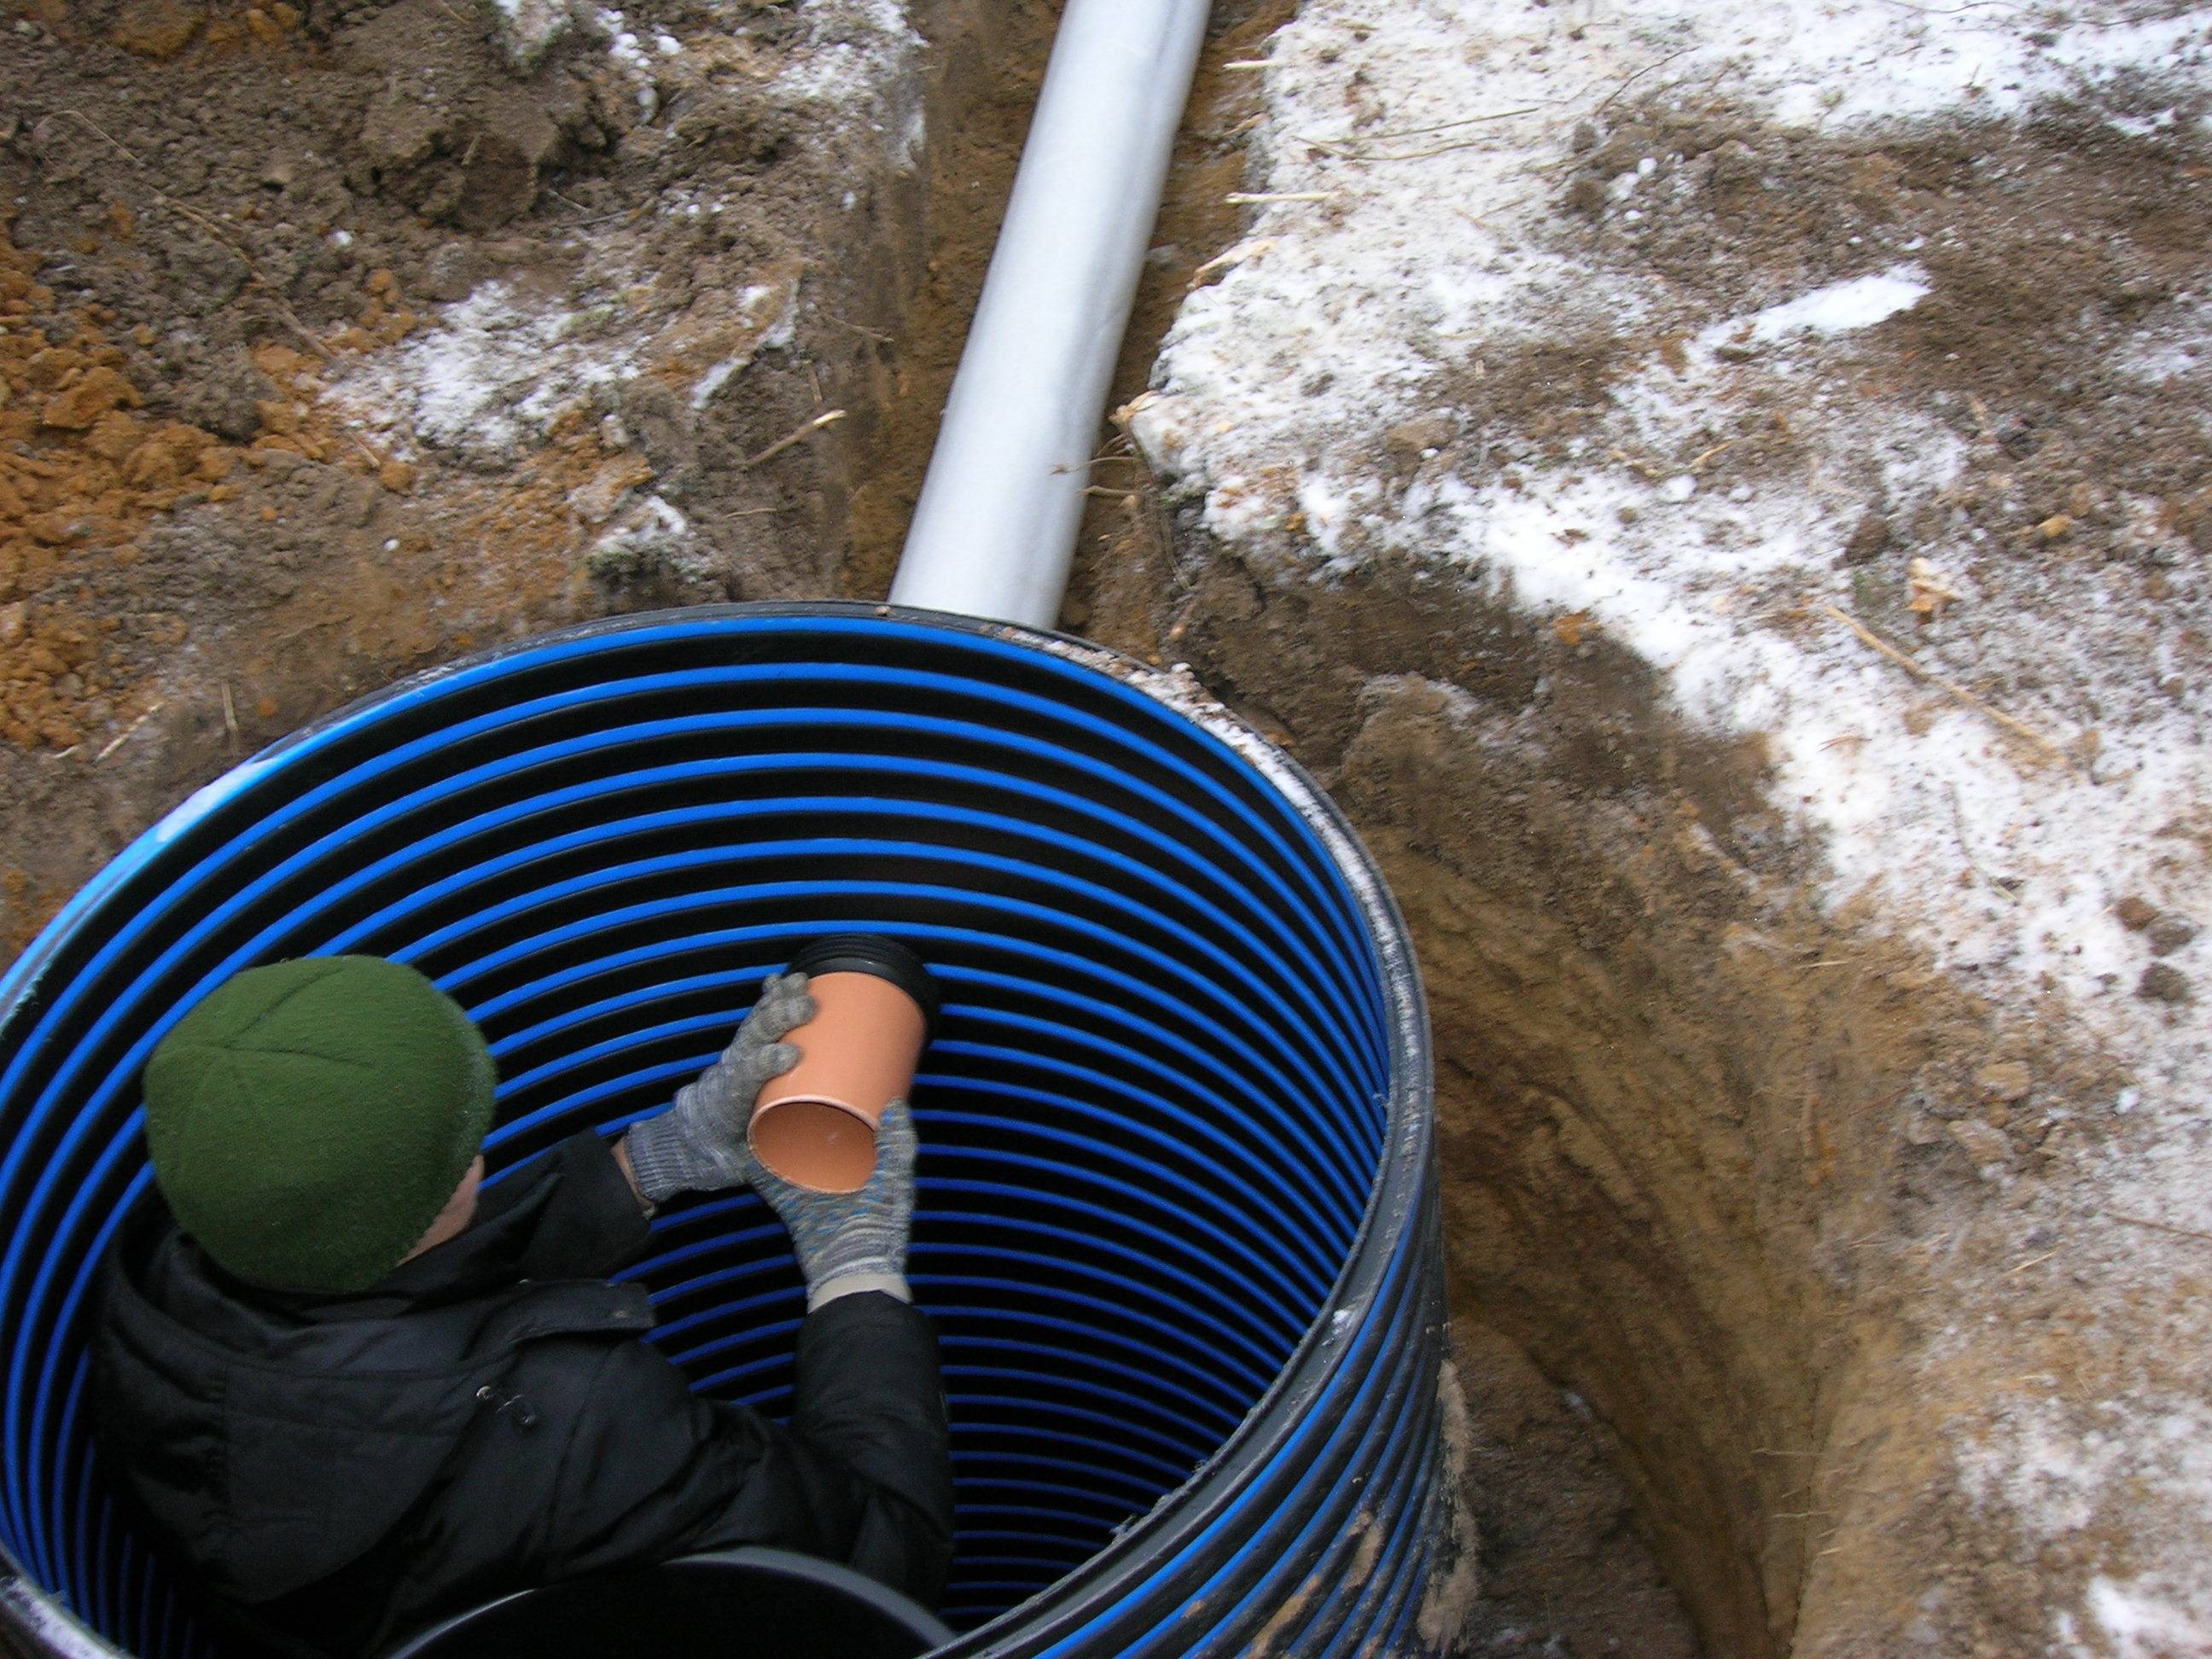 Колодец для водопровода и канализации. Теплоизоляция для труб ПНД 32 В земле. Утеплитель для труб ПНД 32 под землей. Прокладка ПНД трубы 32 с утеплителем для скважины. Утепленный колодец для водопровода.